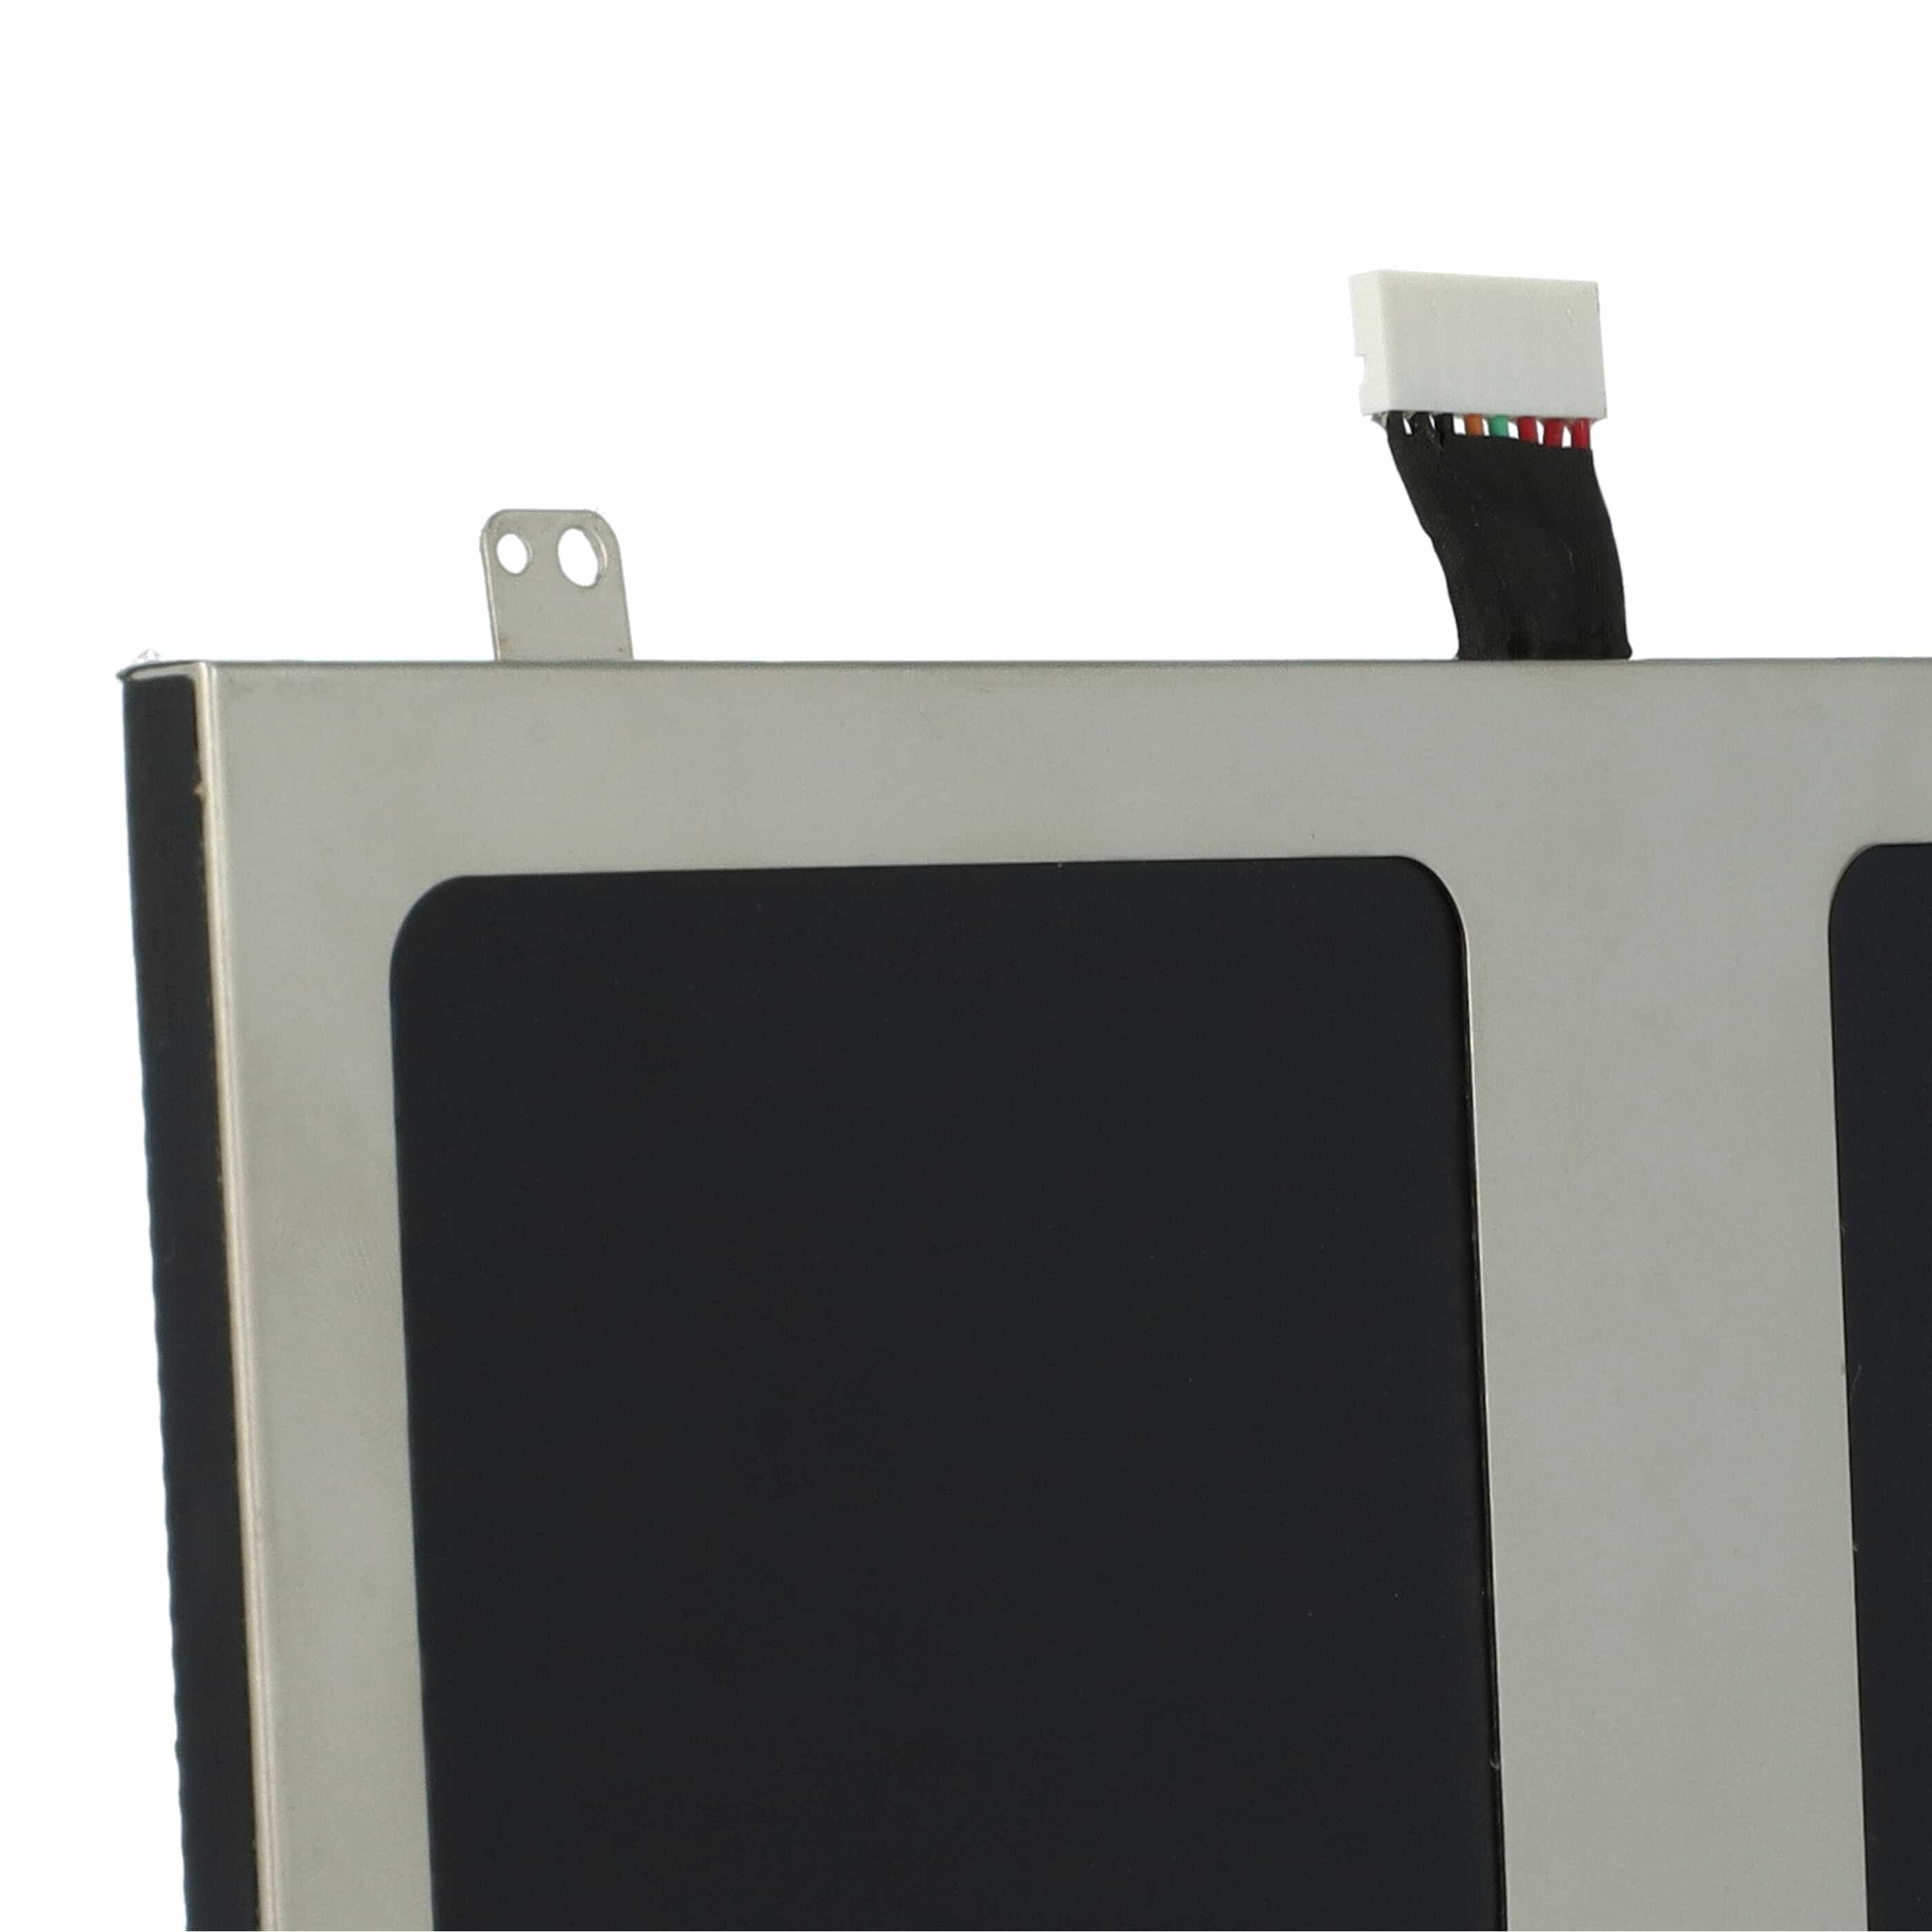 Akumulator do laptopa zamiennik Fujitsu FPCBP410, FMVNBP230, FPB0304 - 3300 mAh 14,8 V LiPo